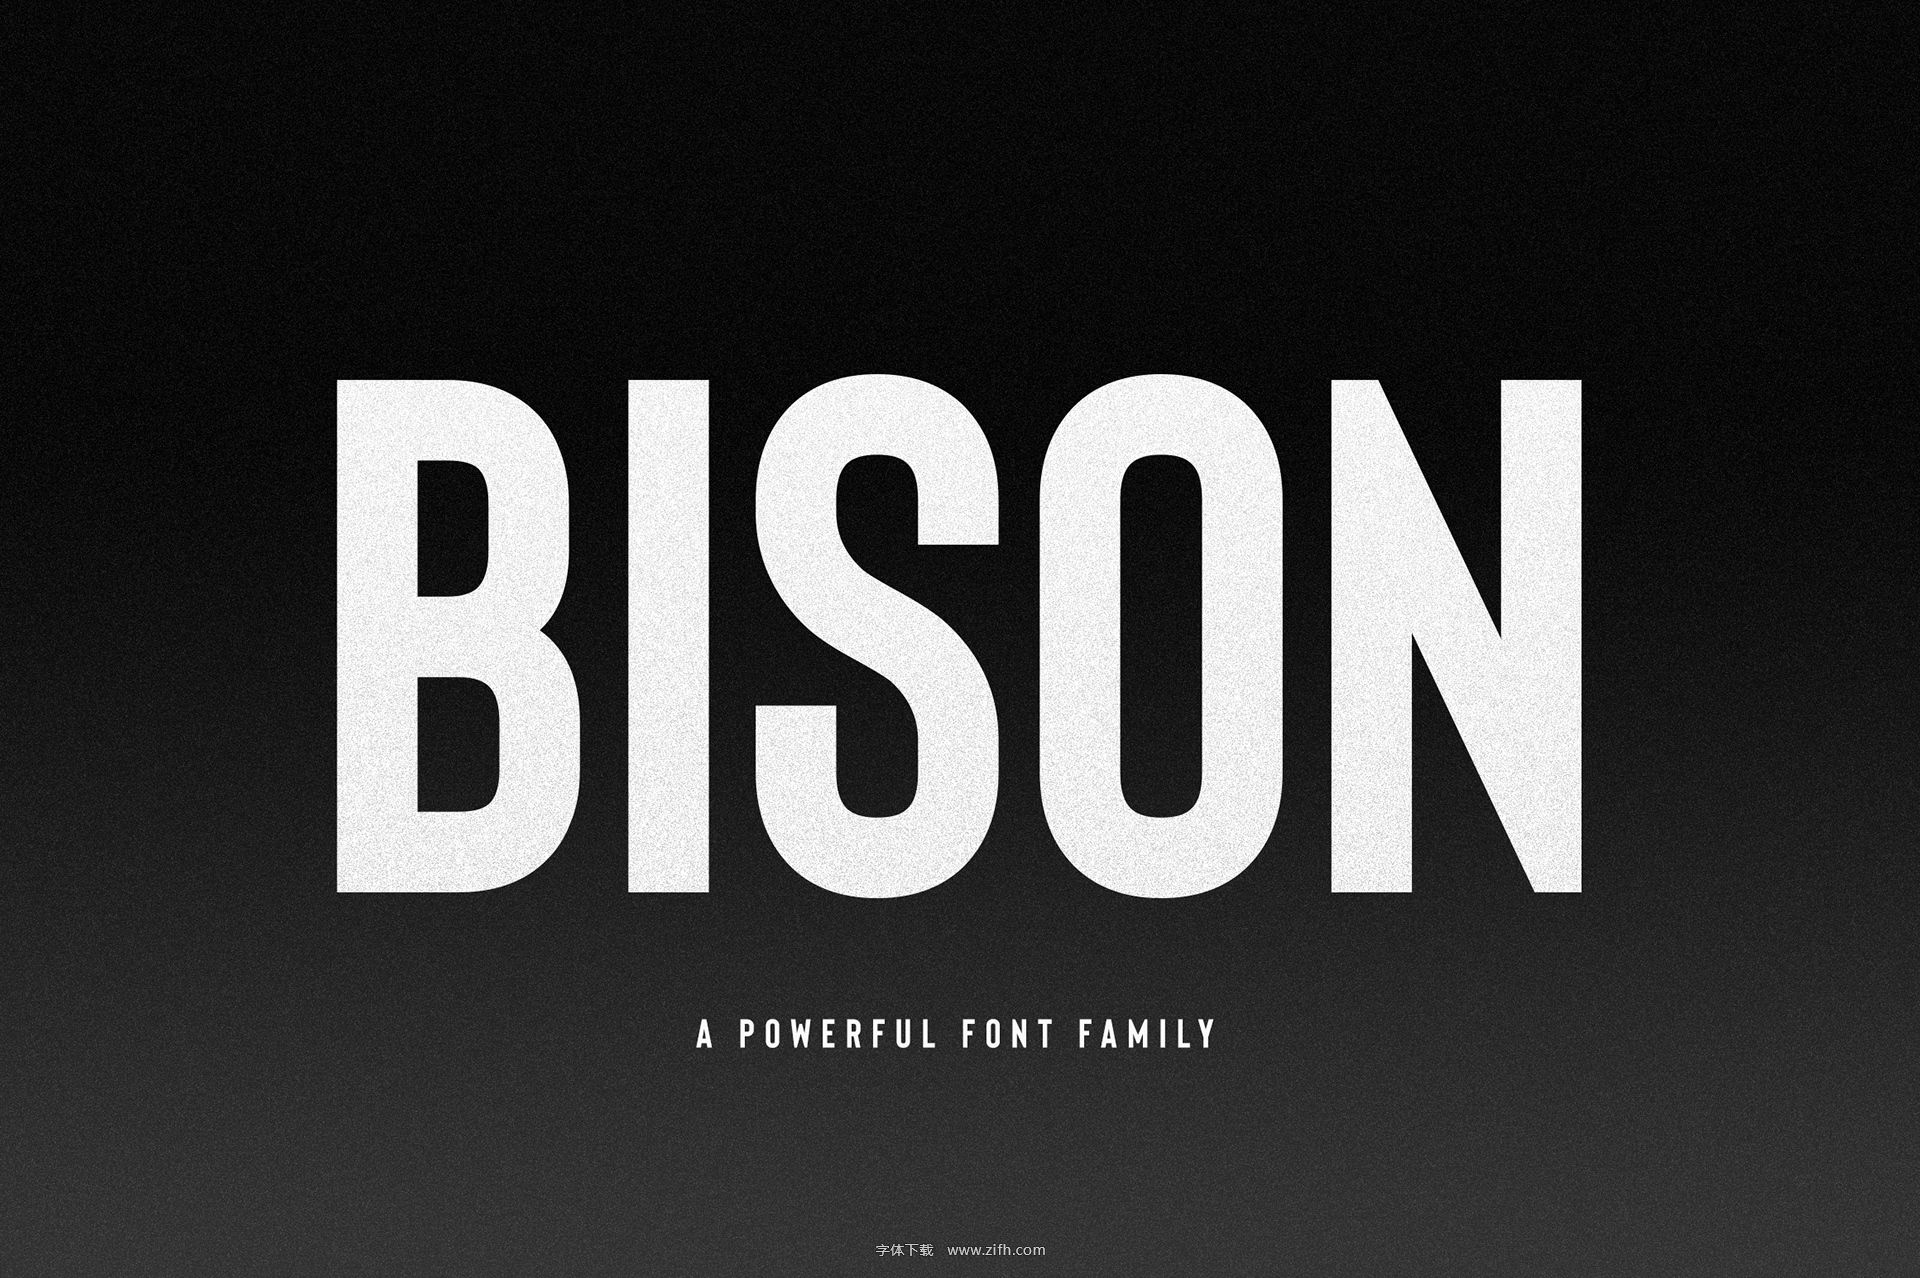 Bison Font Family